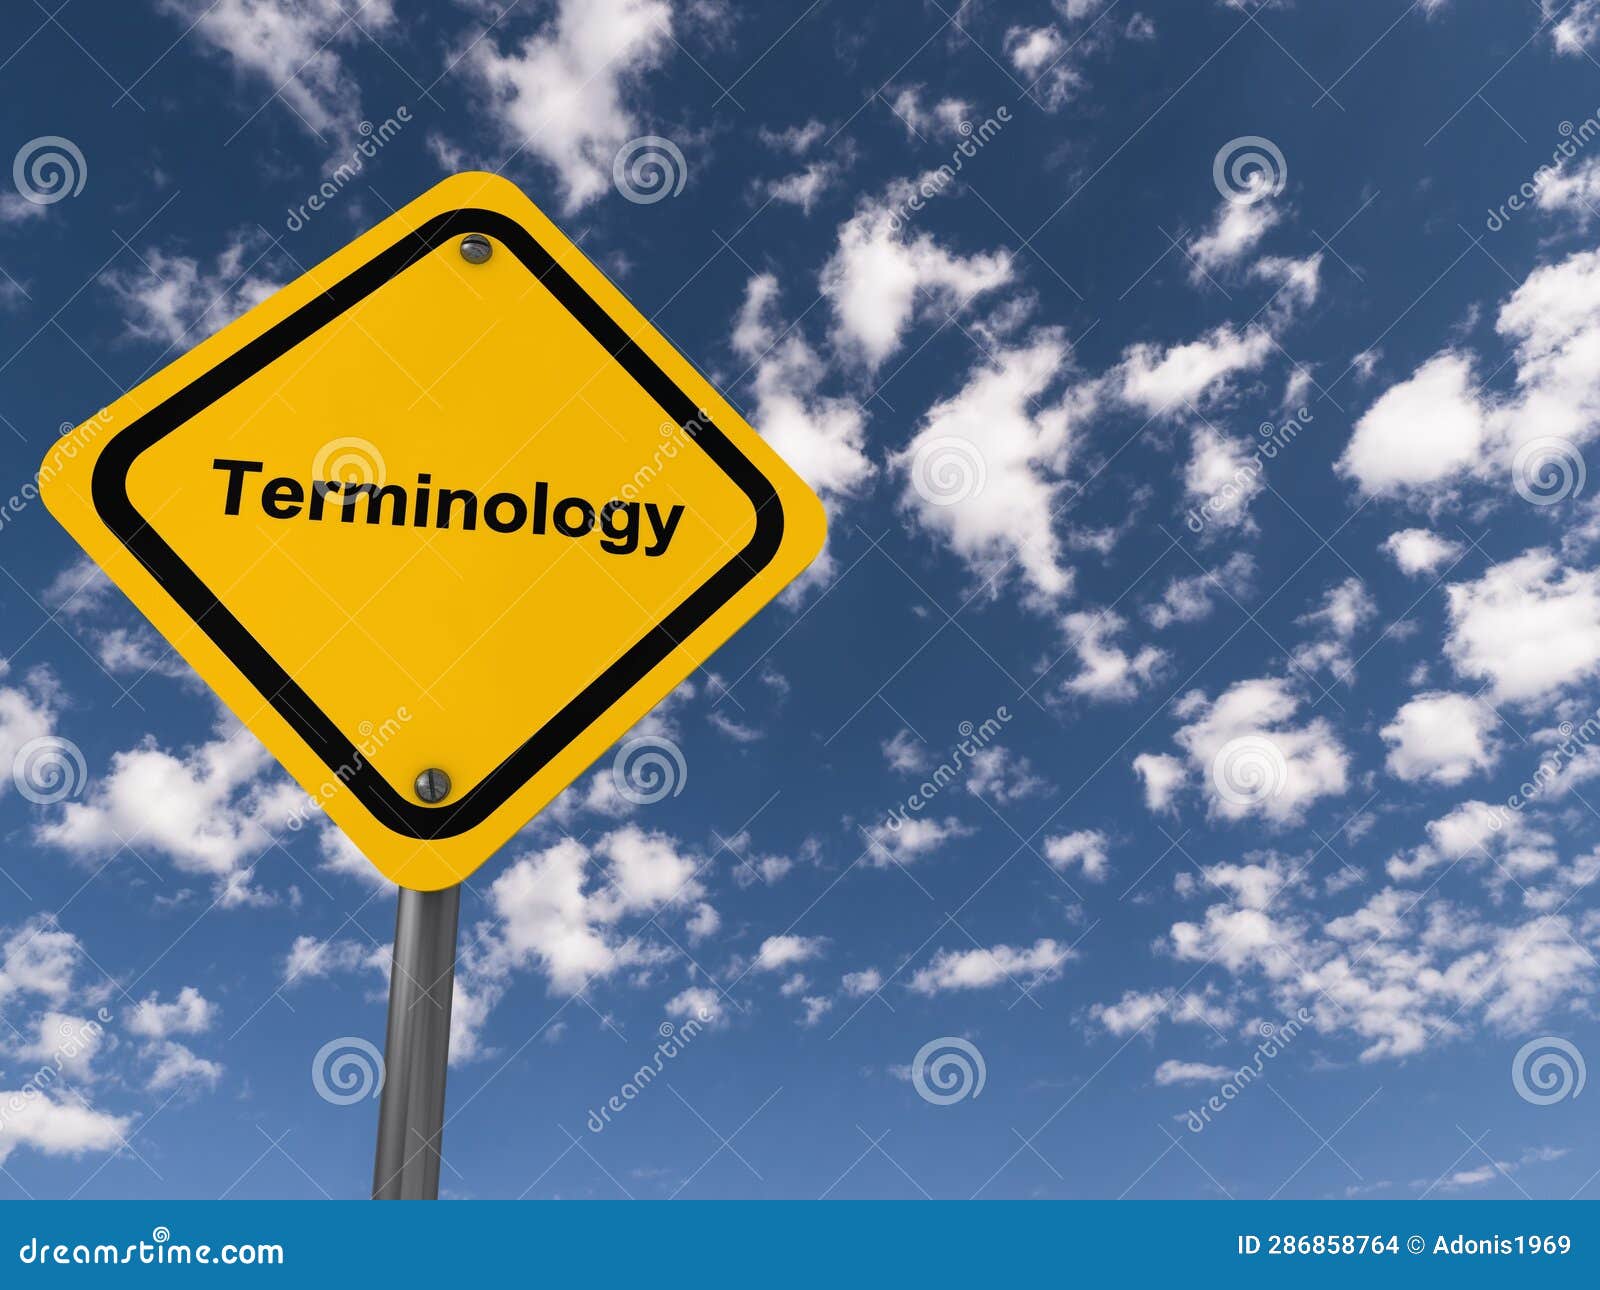 terminology traffic sign on blue sky